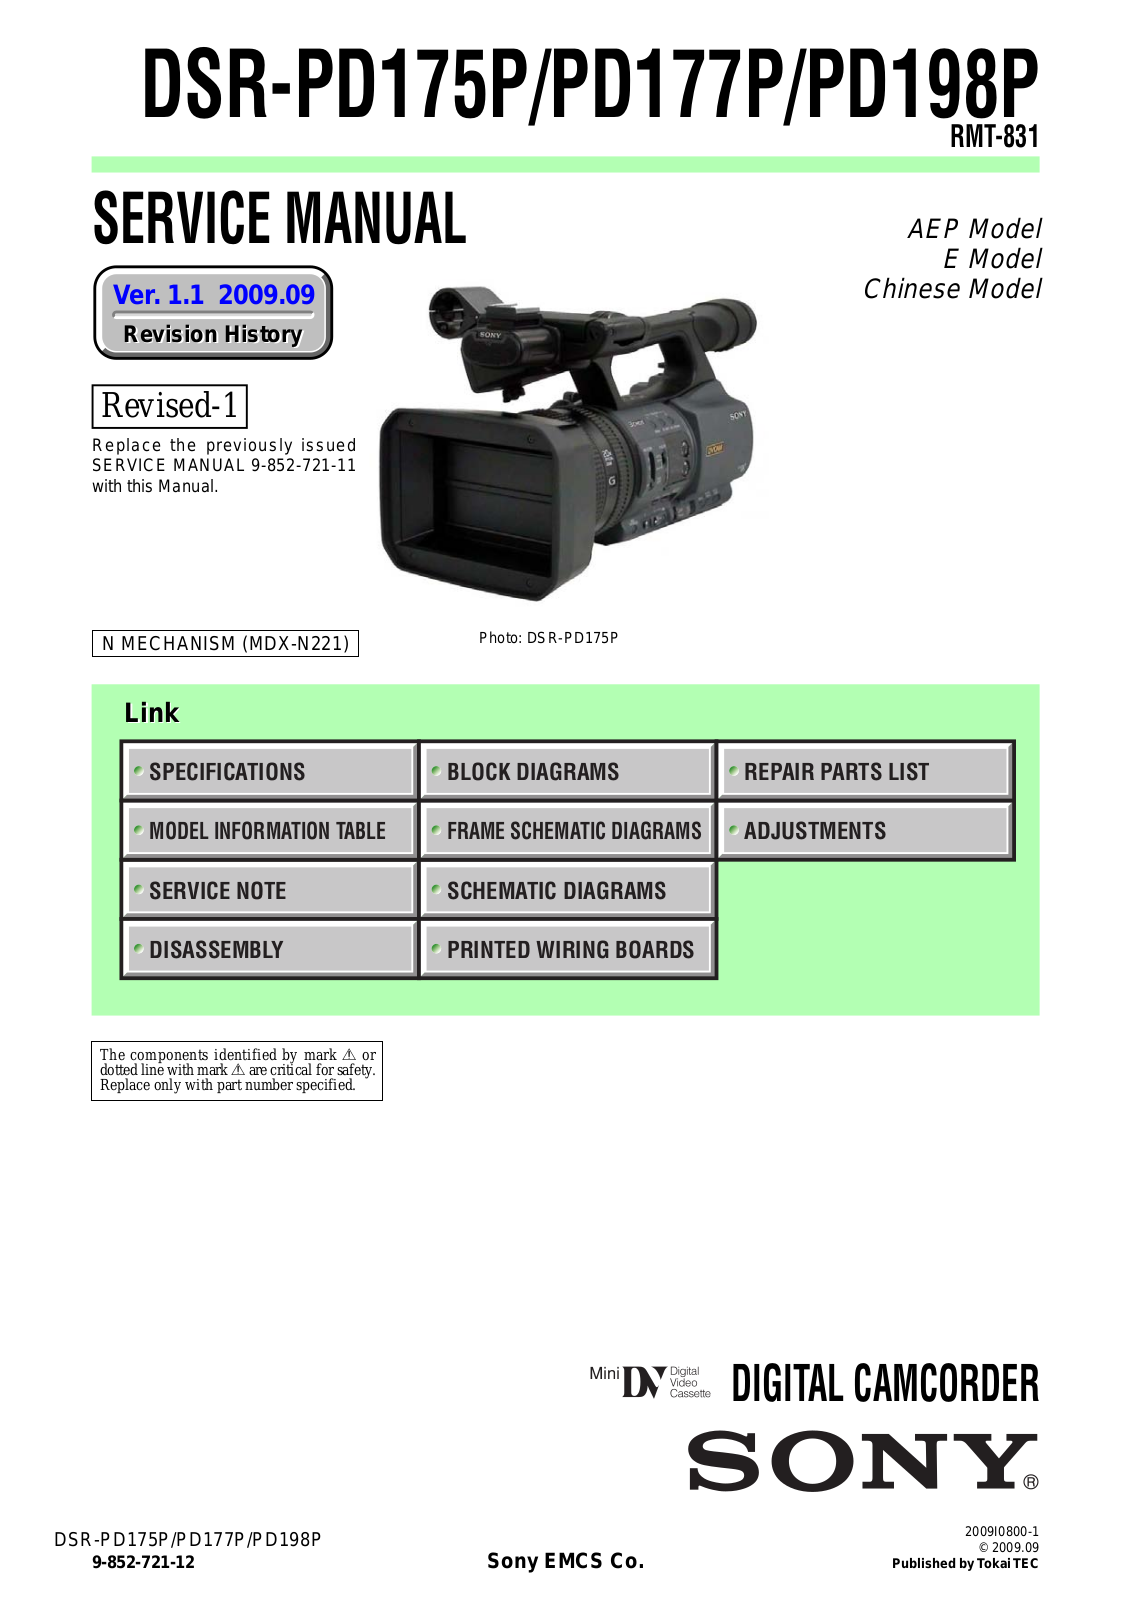 Sony DSR-PD175P, DSR-PD177P, DSR-PD198P Service Manual